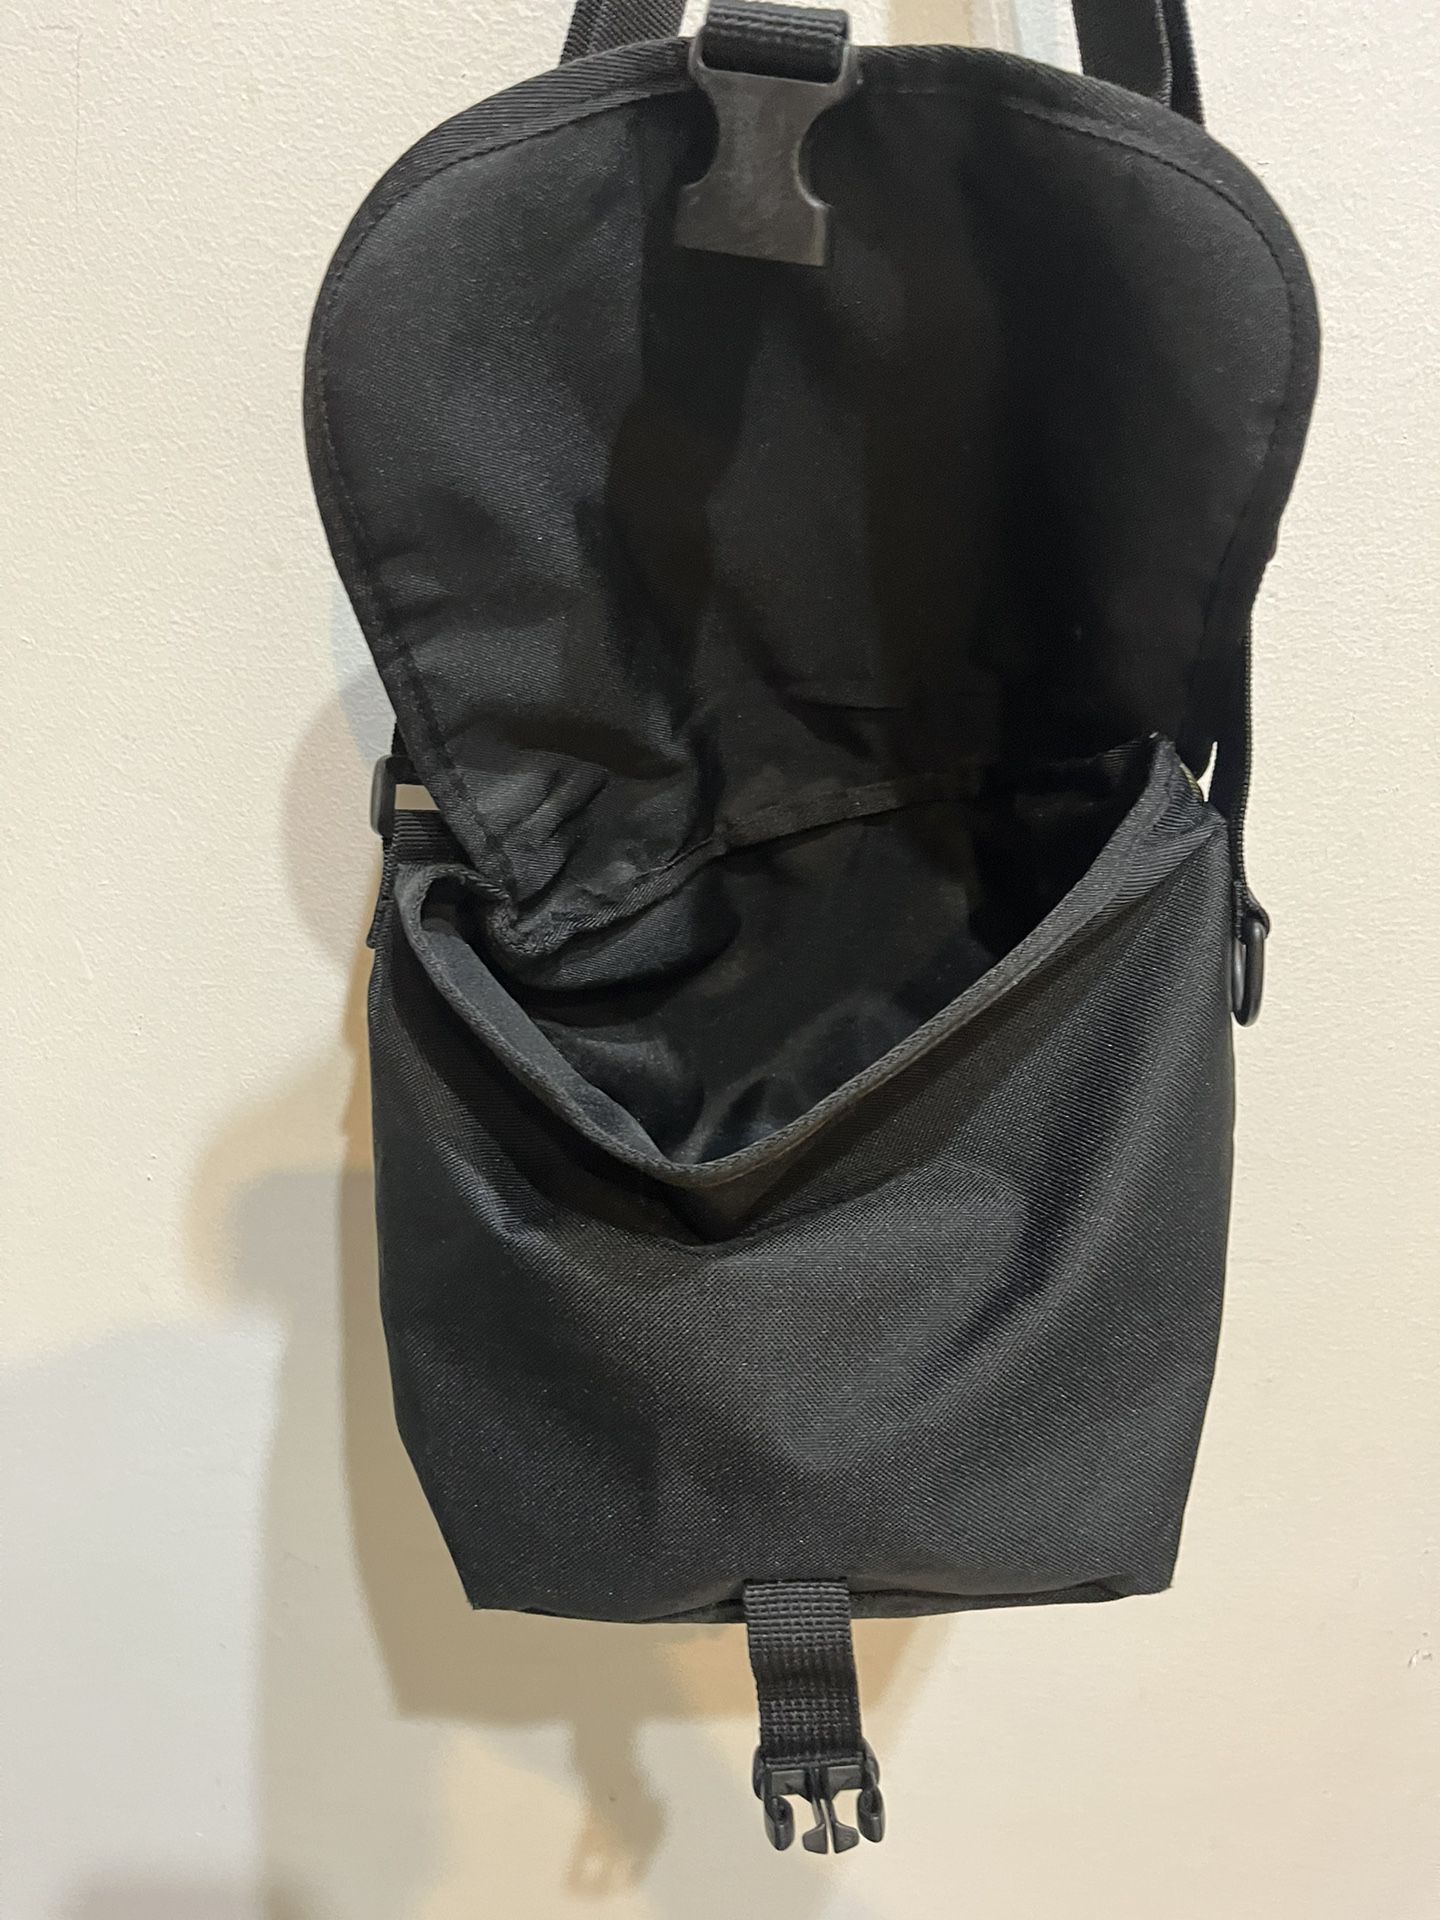 BAPE Tokyo Black Book Bag for Sale in Chicago, IL - OfferUp